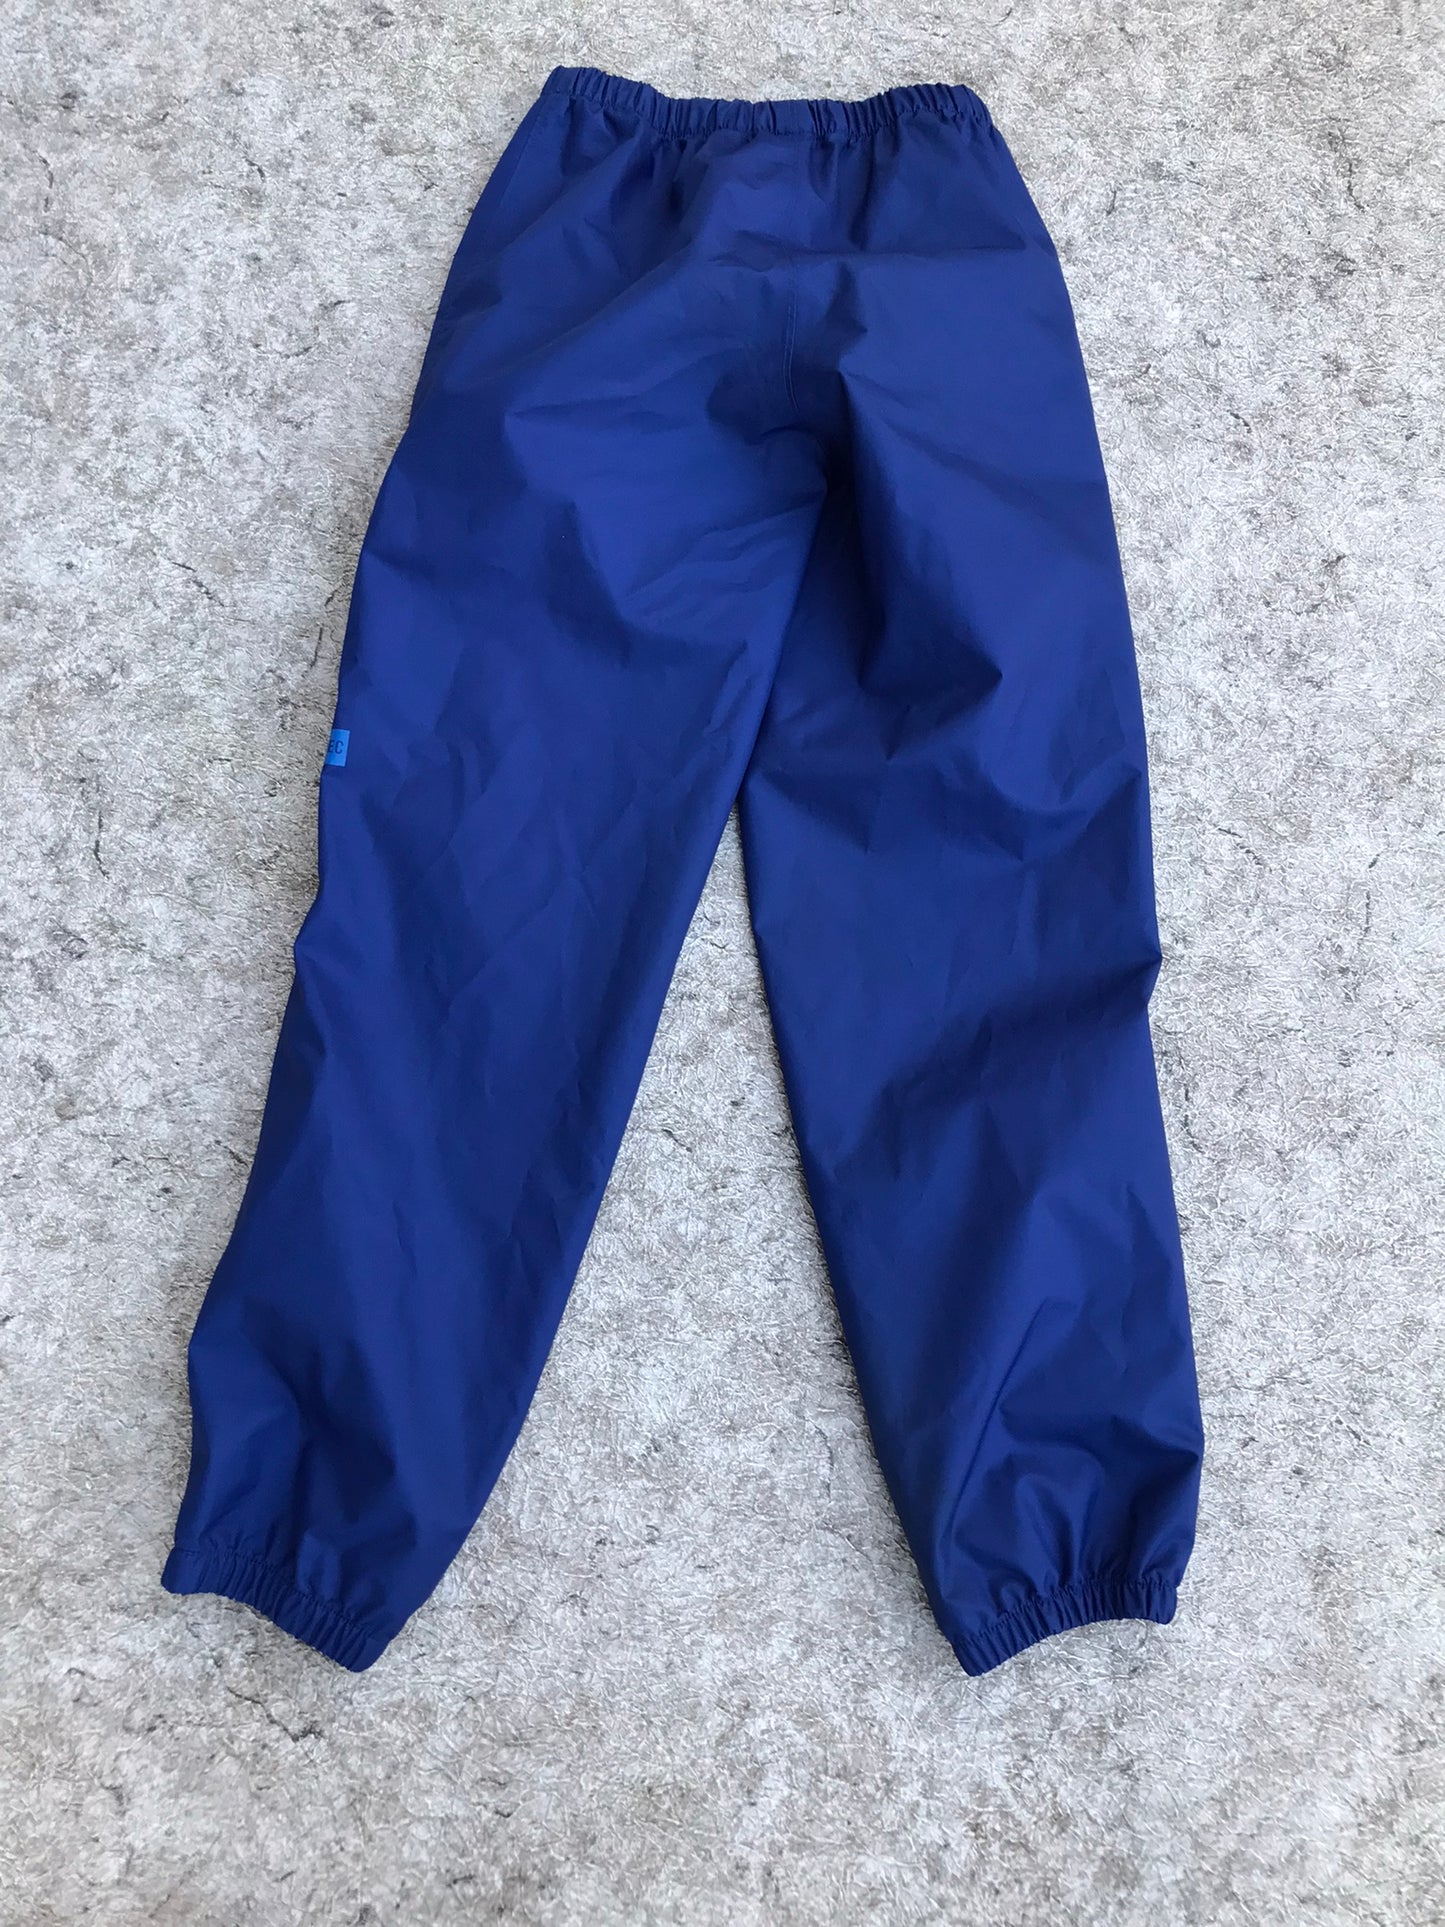 Rain Pants Child Size 12 MEC Marine Blue New Demo Model